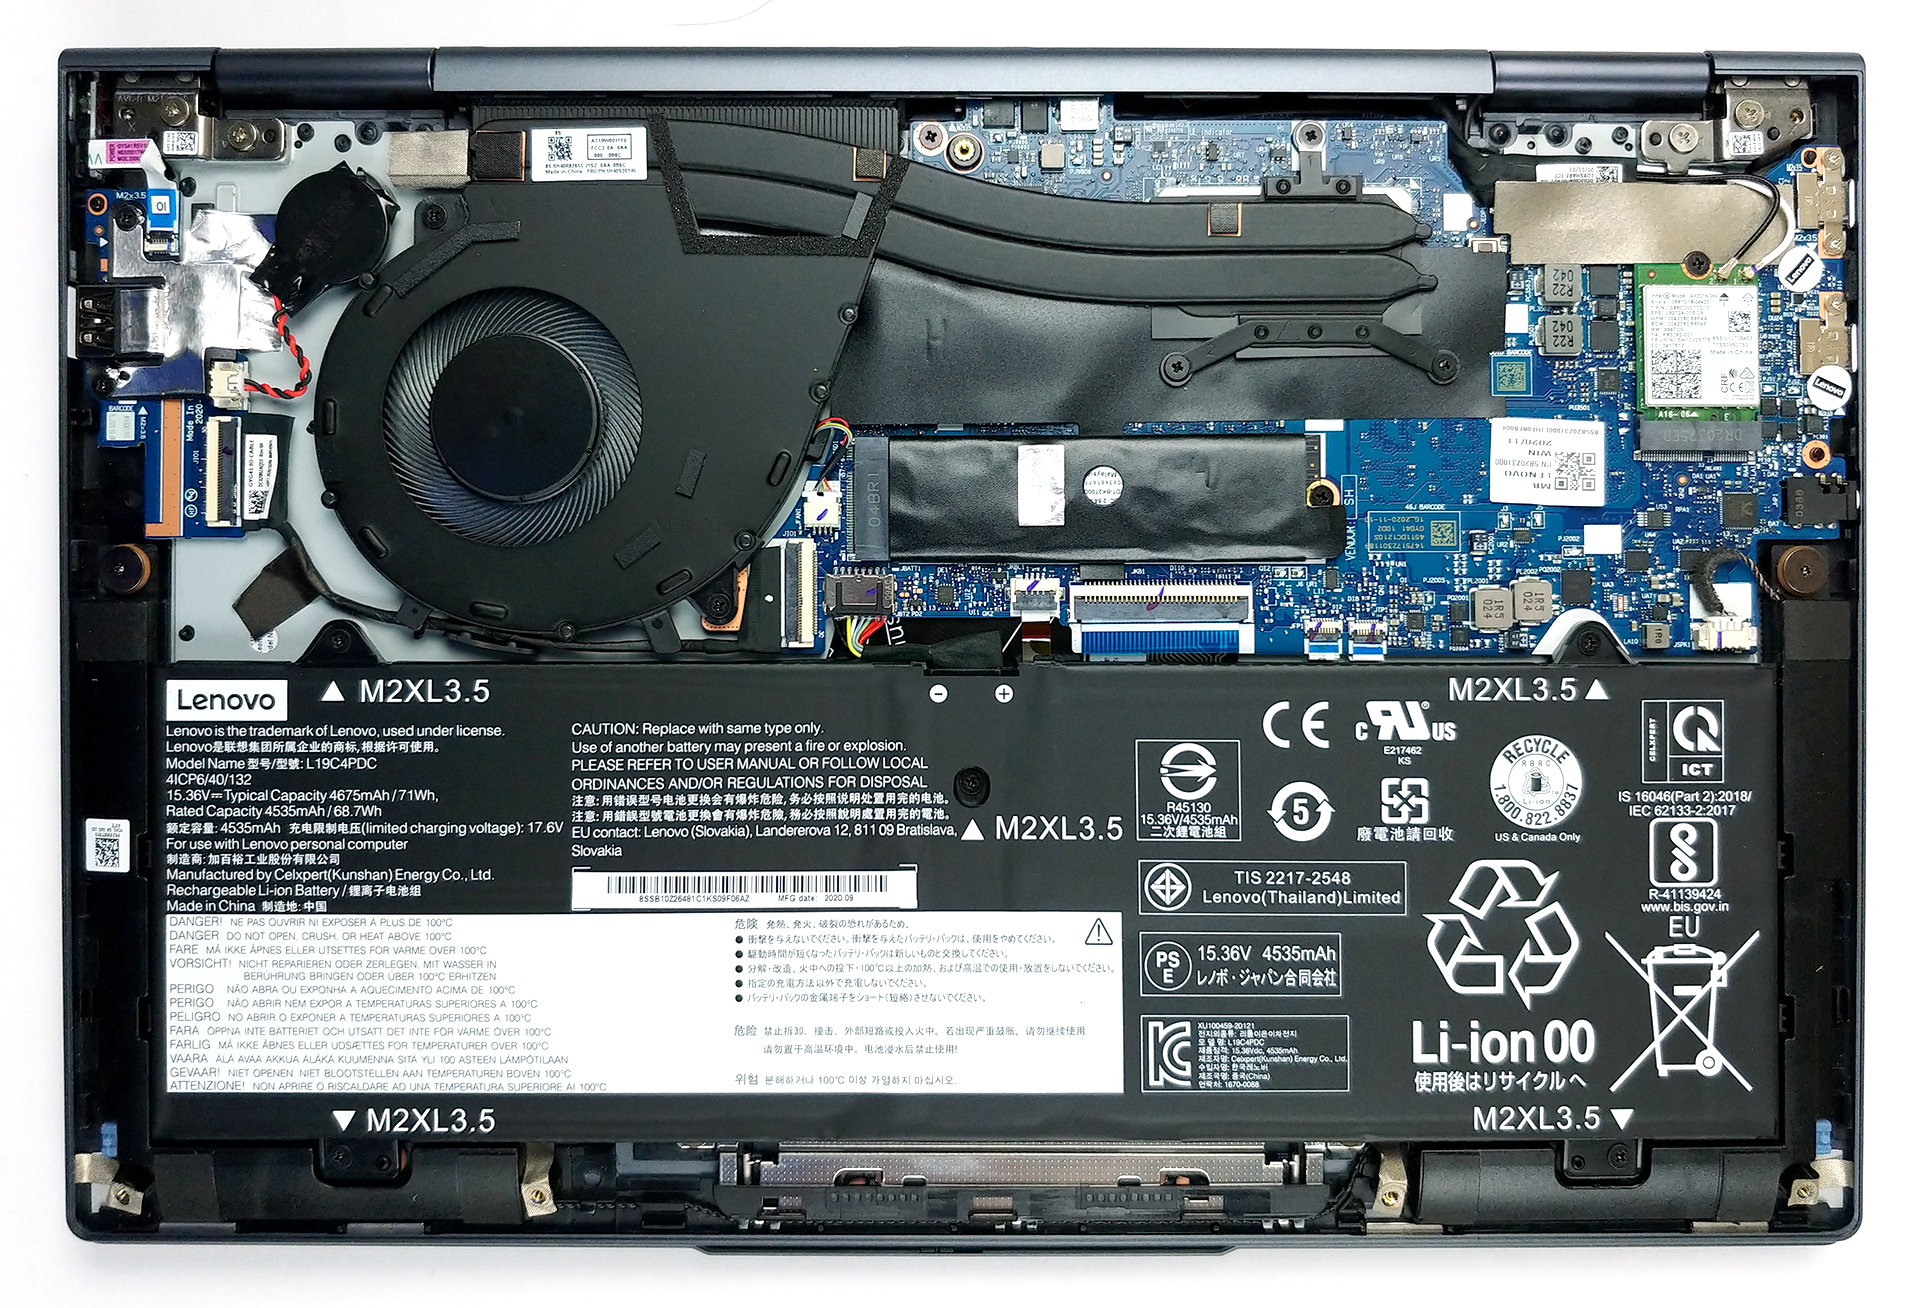 Lenovo Yoga 7i 14 Gen 7 review: refinements galore